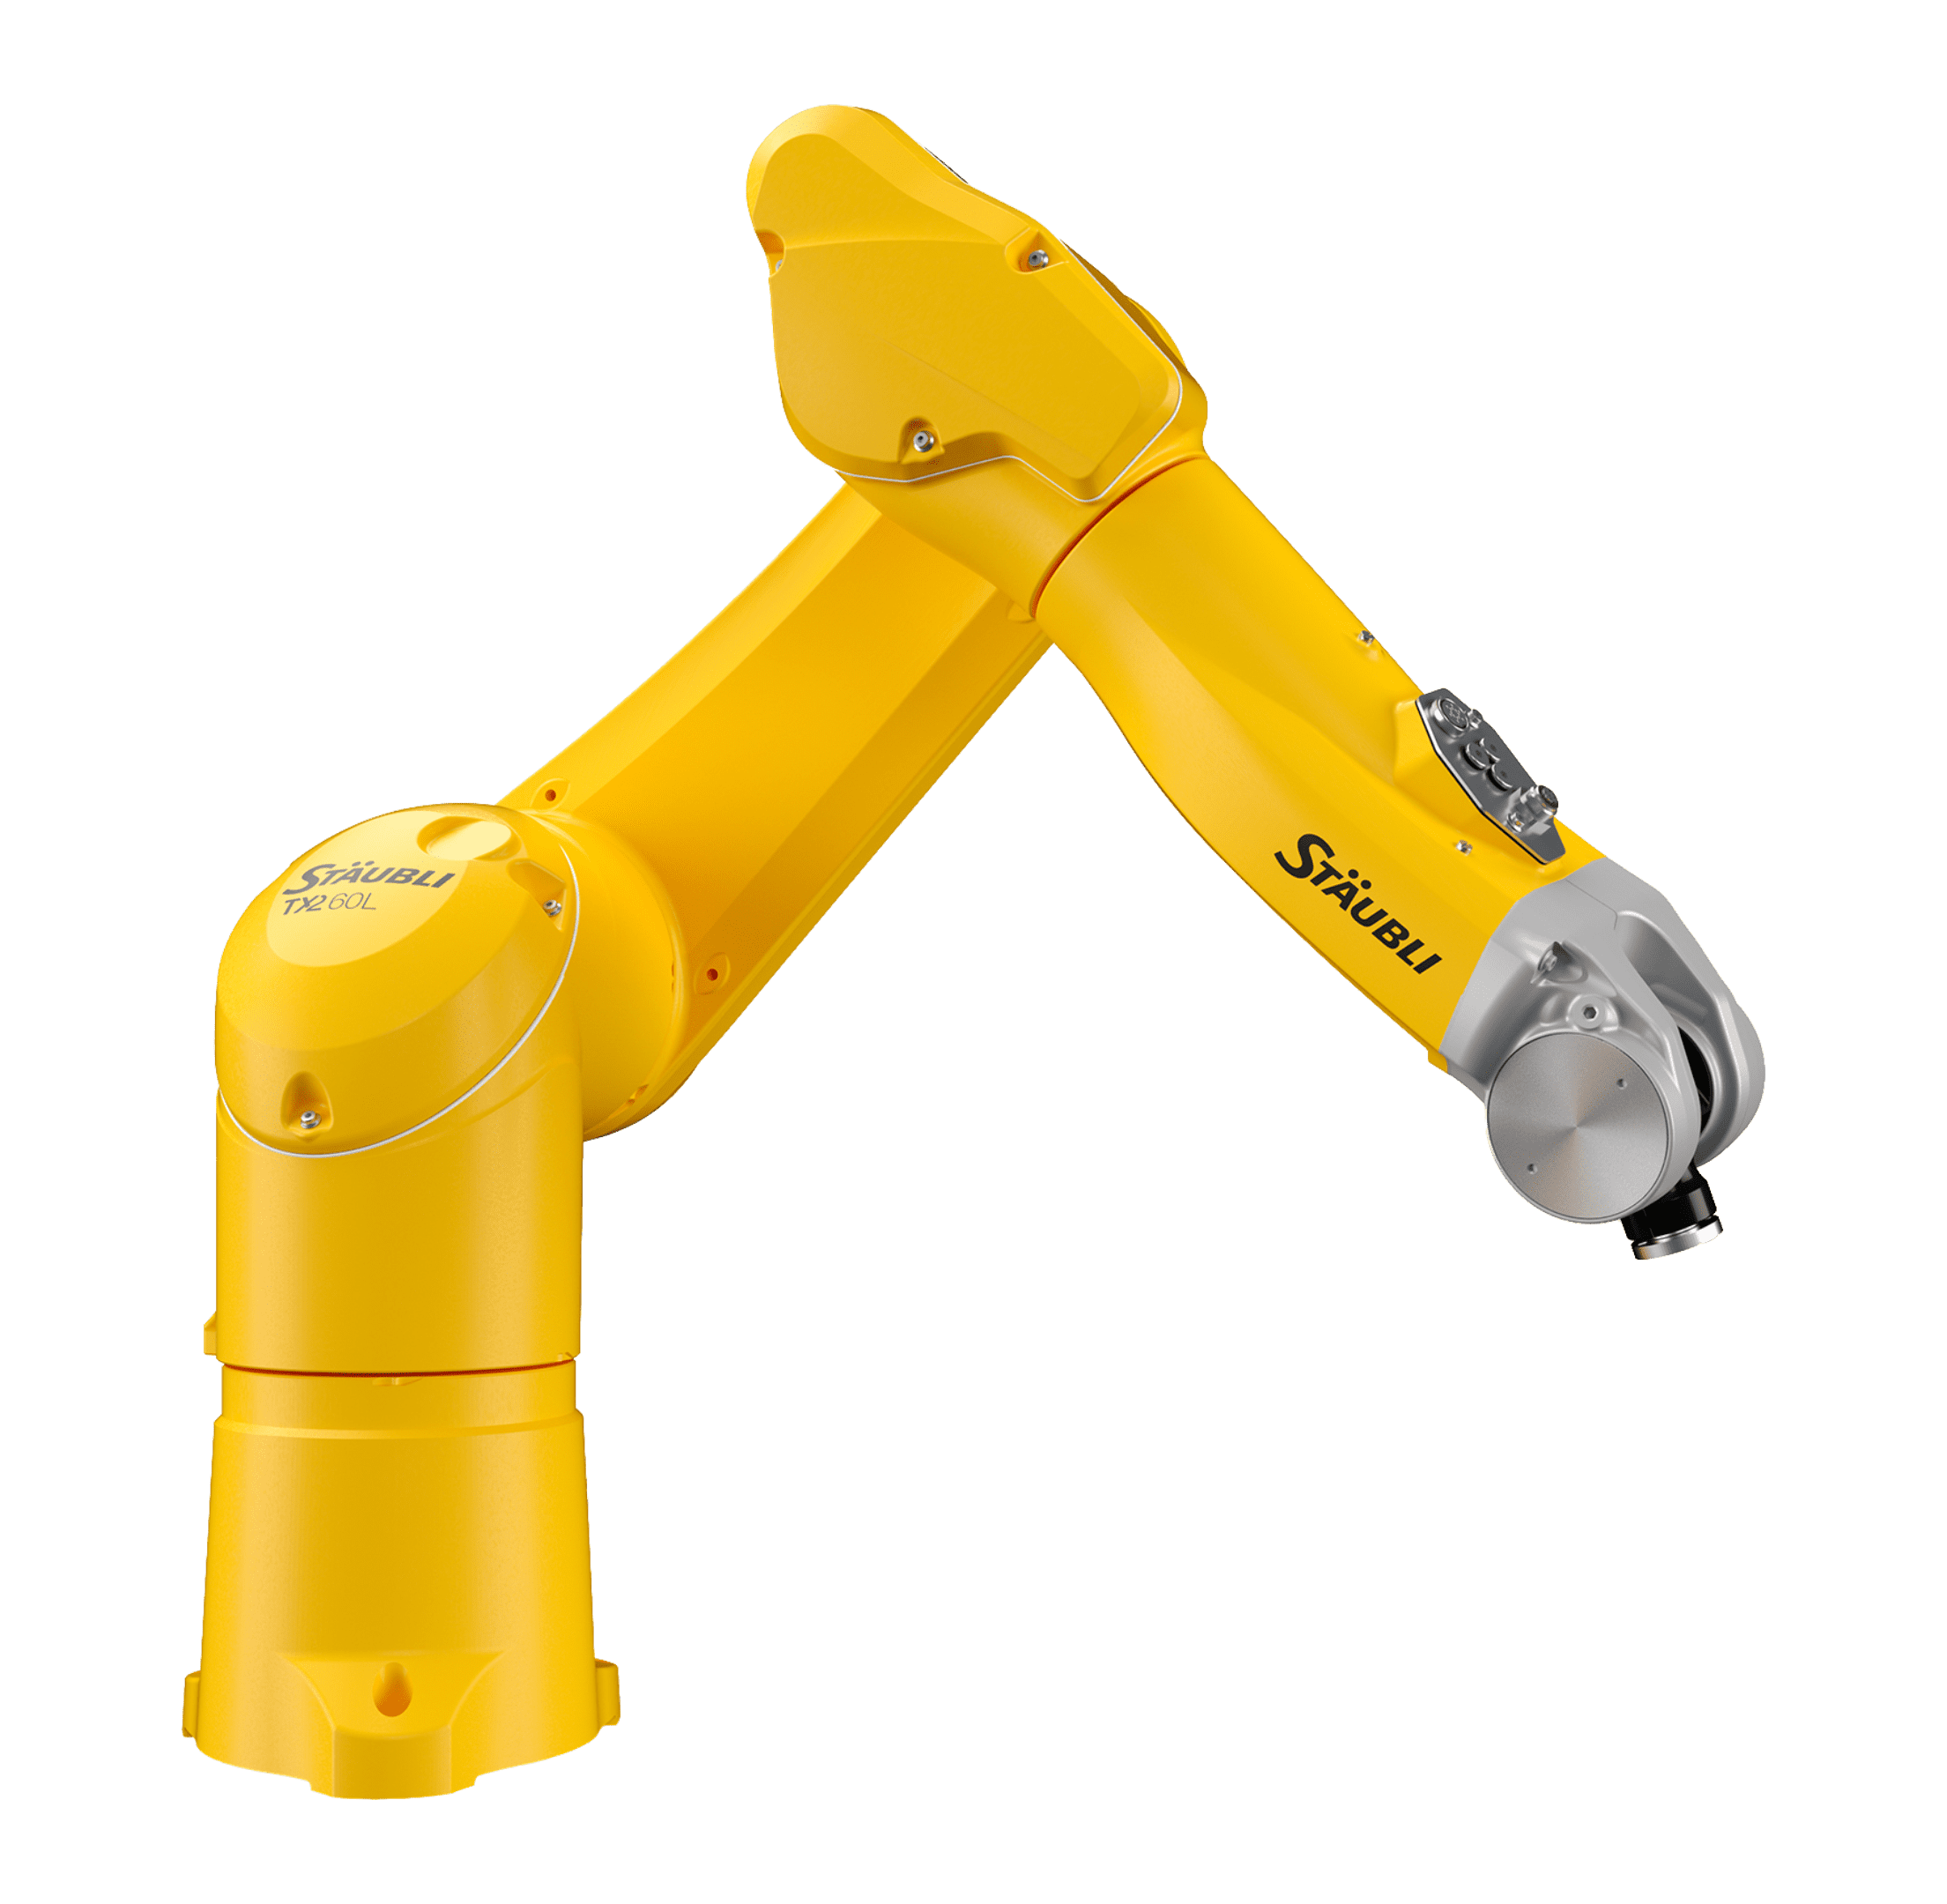 Industrial Robot Staubli TX2-60L